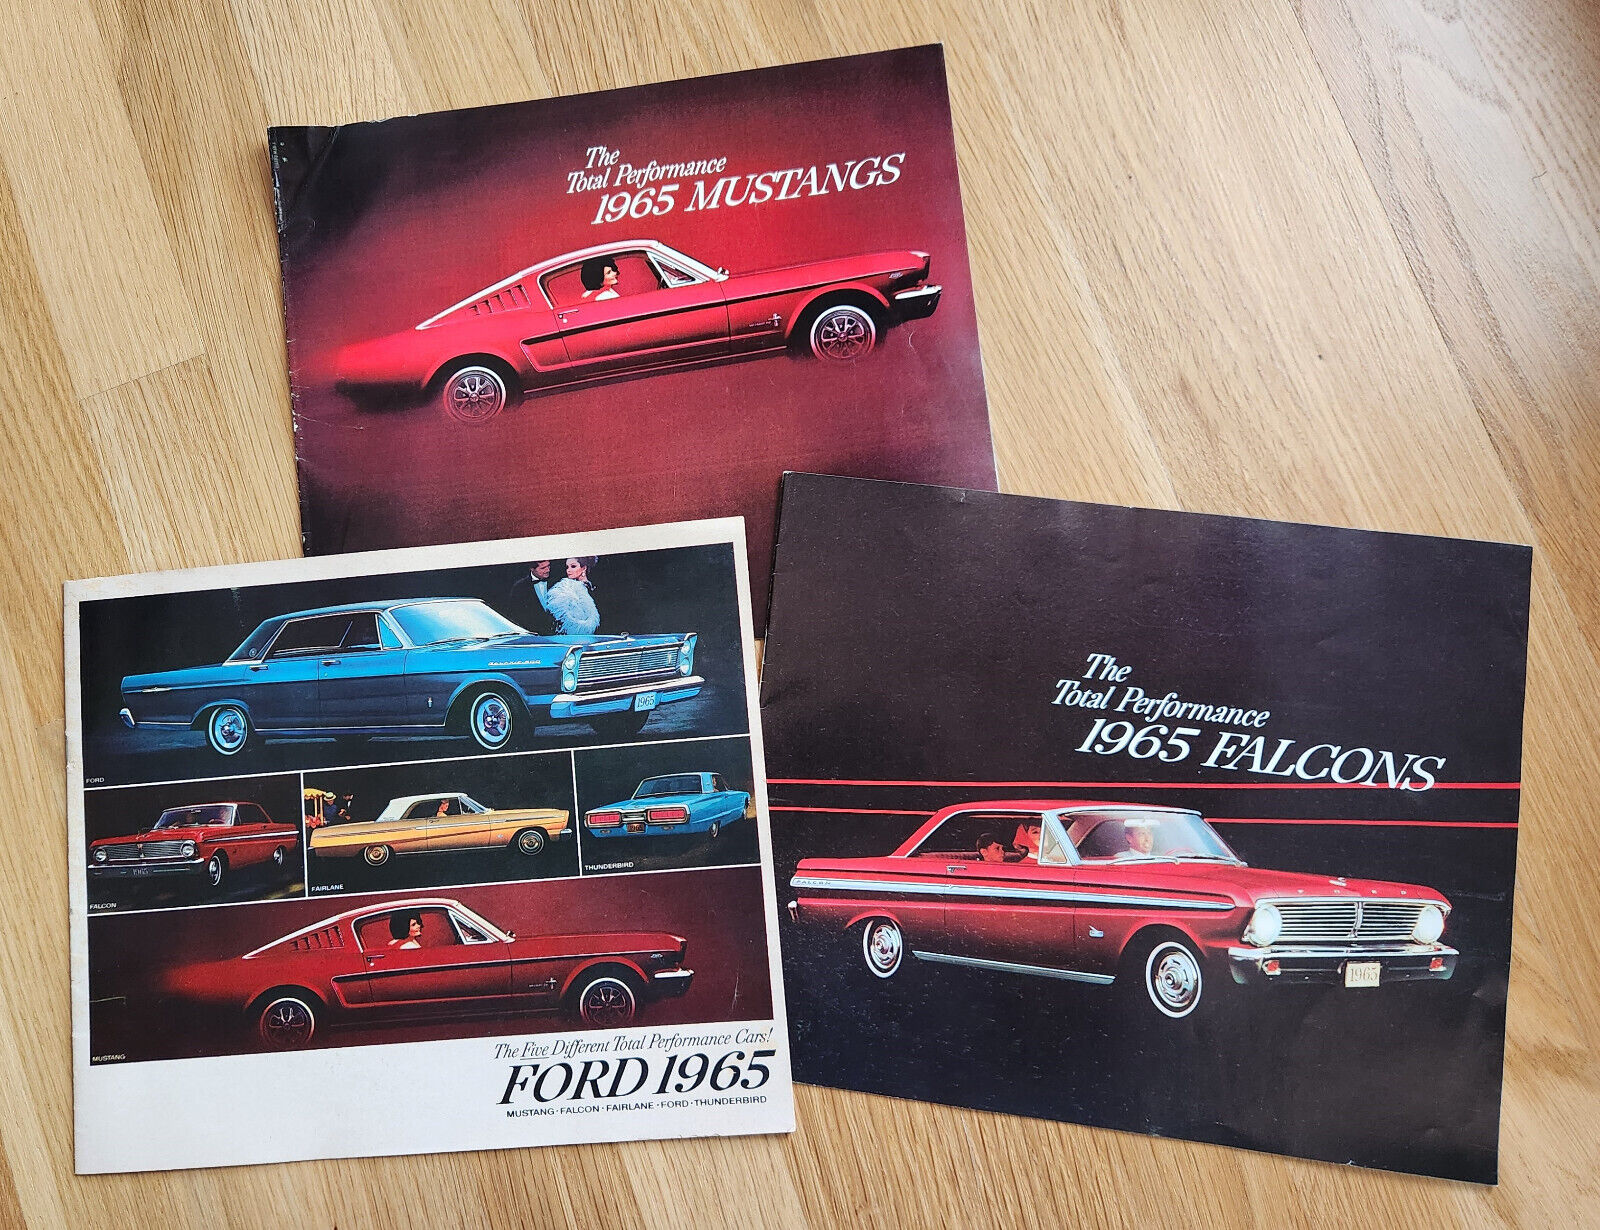 ORIGINAL 1965 Ford Color Dealer Brochures - Ford Full Lineup, Falcon, Mustang.